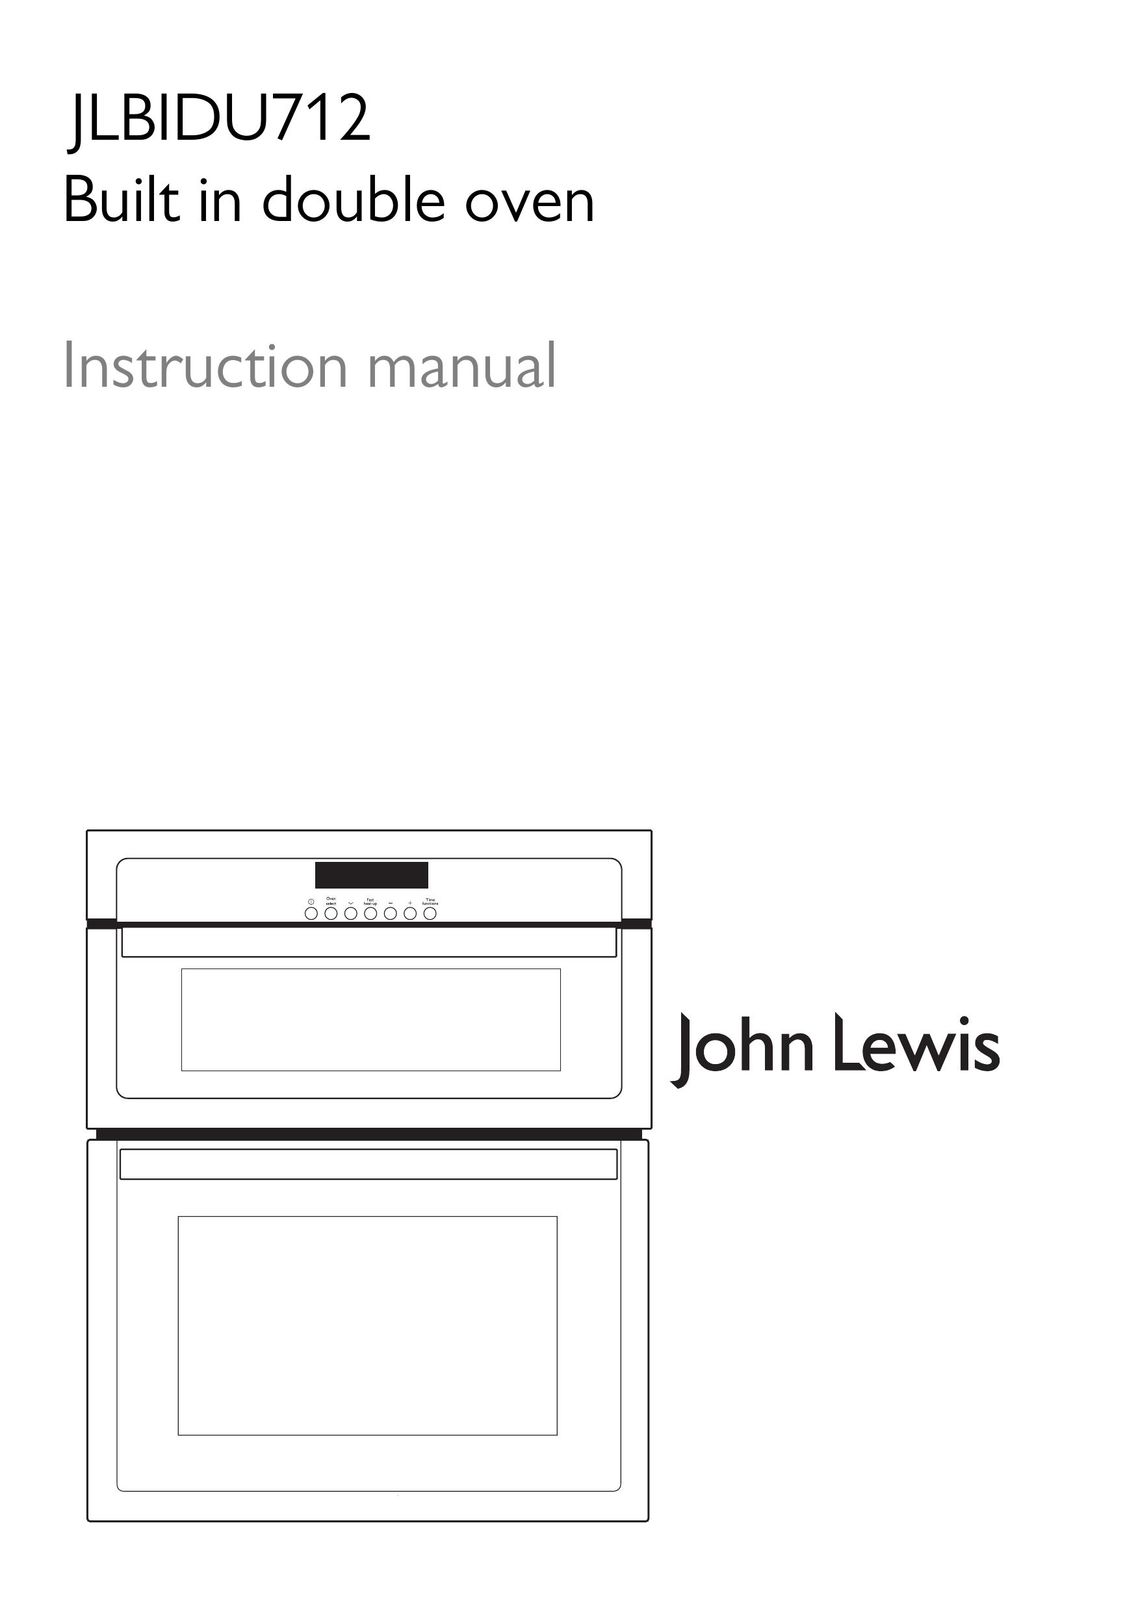 John Lewis JLBIDU712 Double Oven User Manual